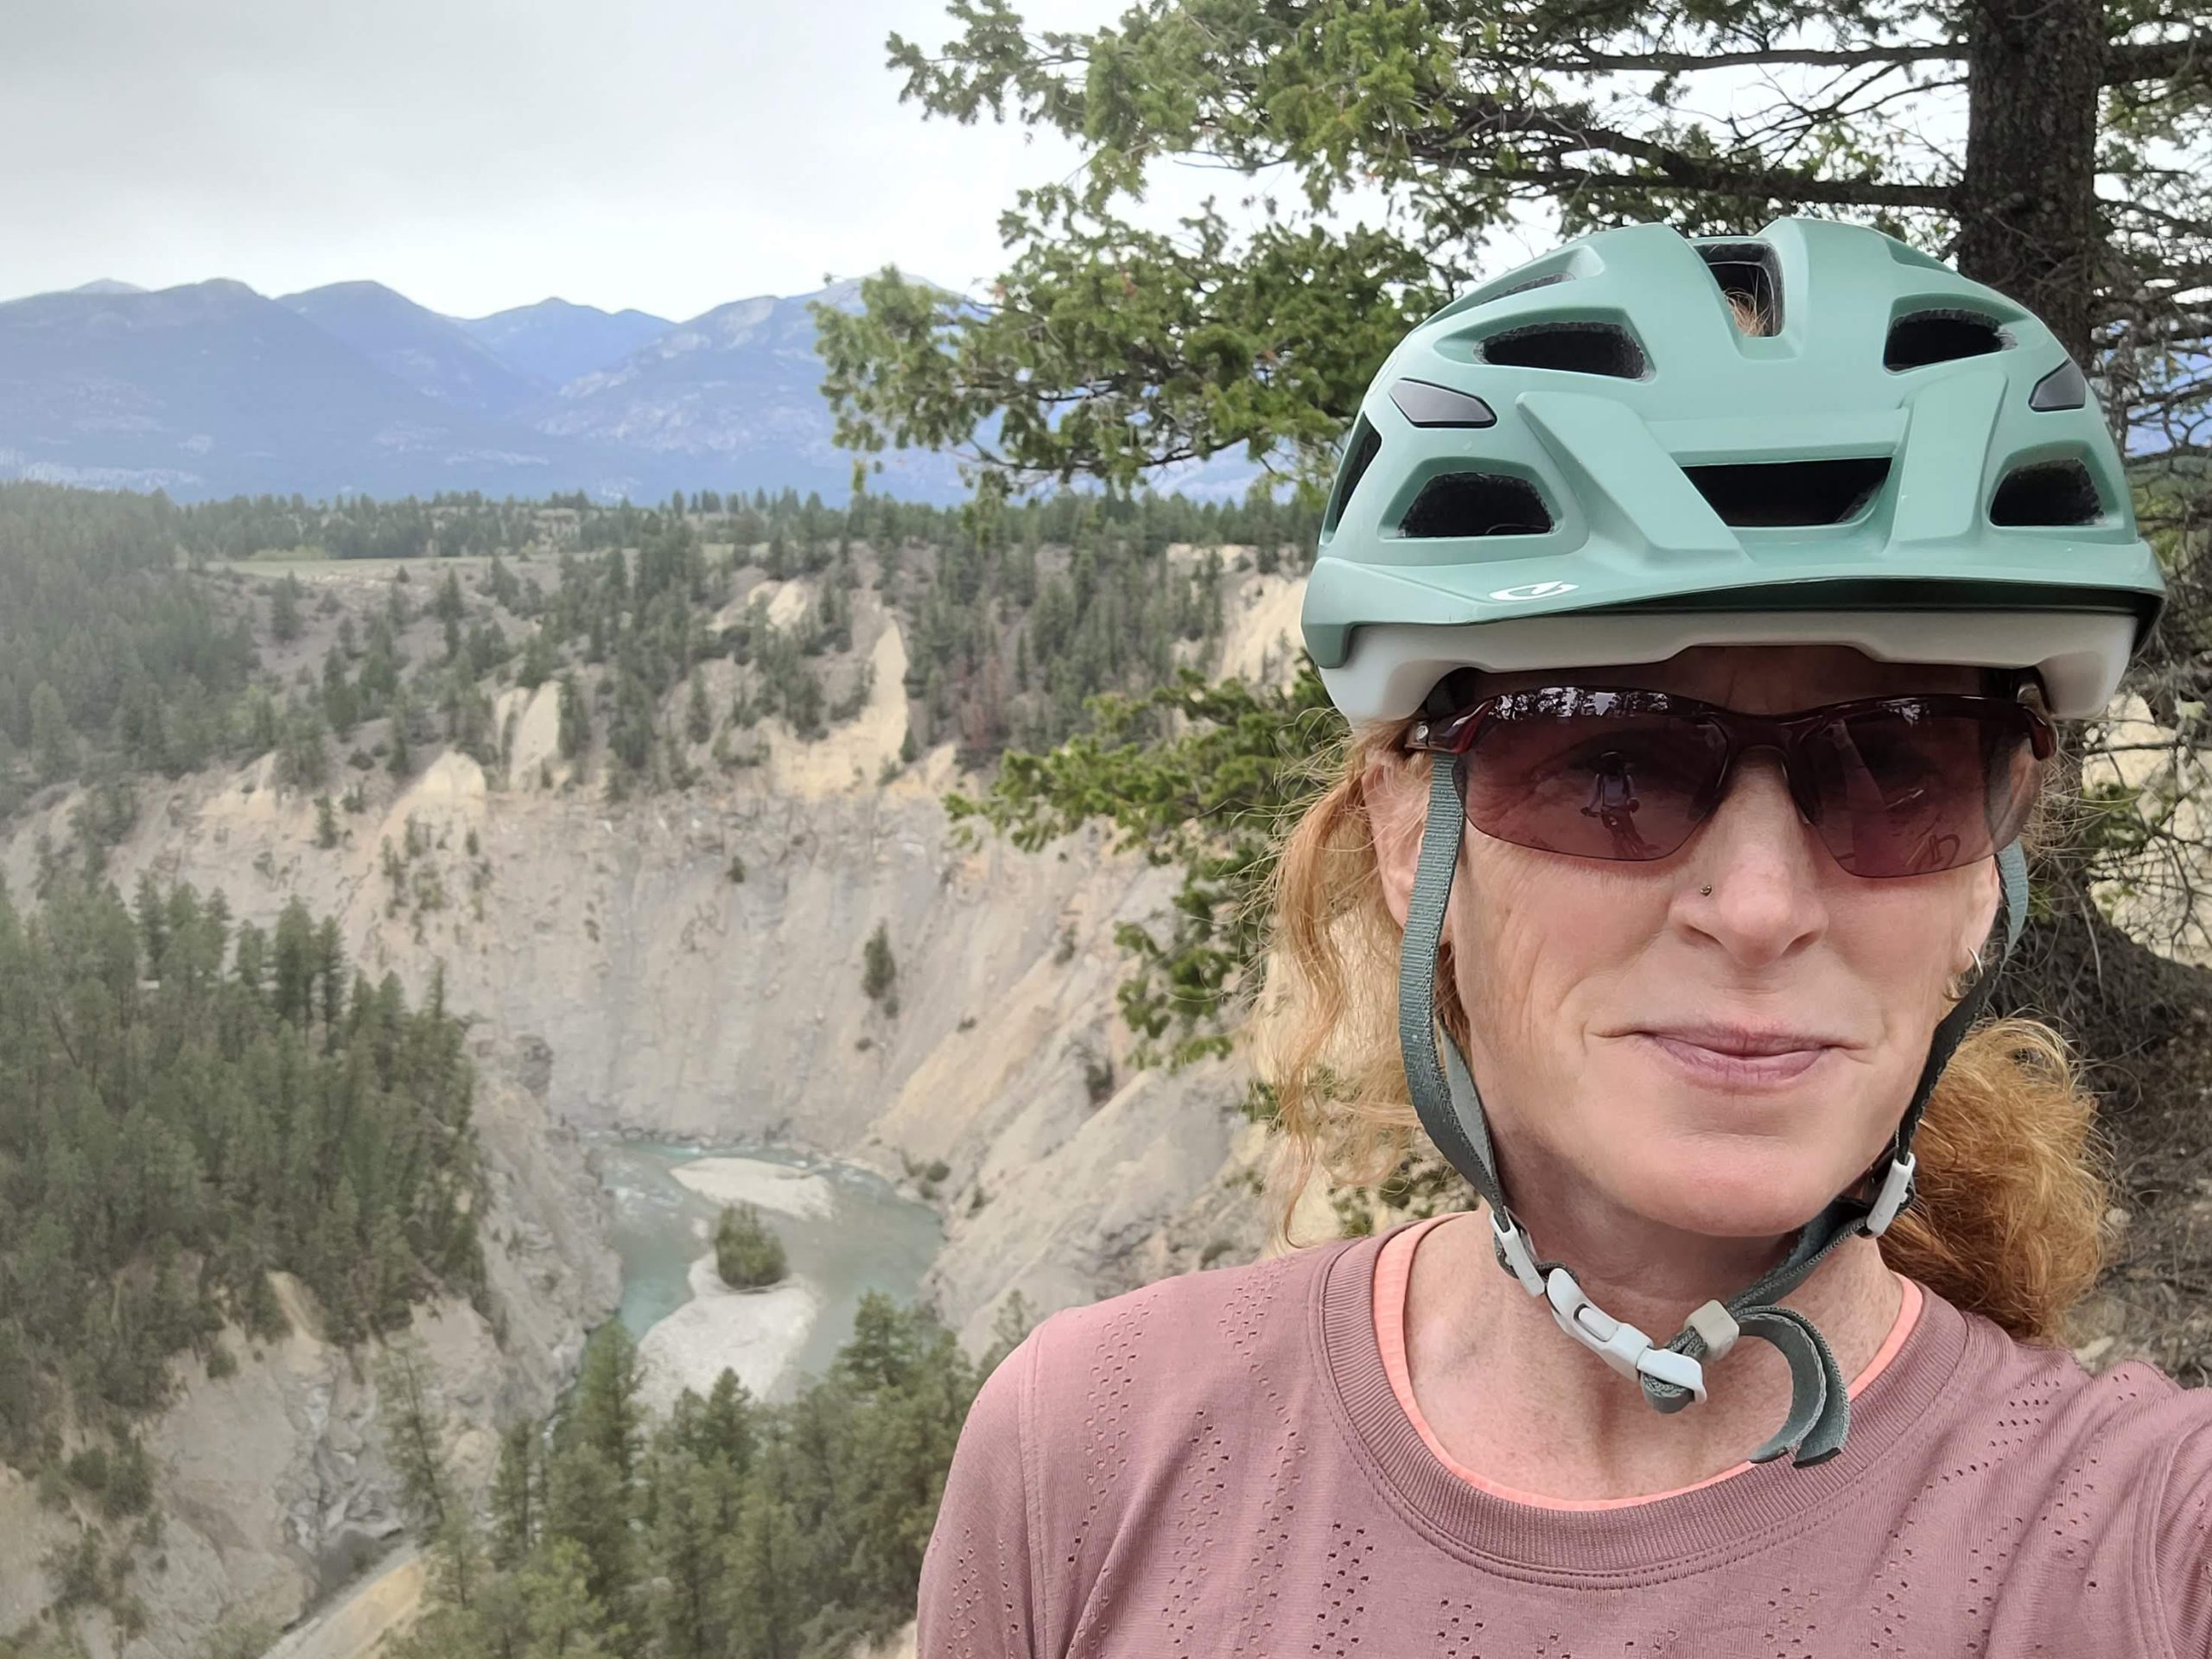 Jani Vogell headshot, wearing helmet while mountain biking in the Kootenay region of BC.